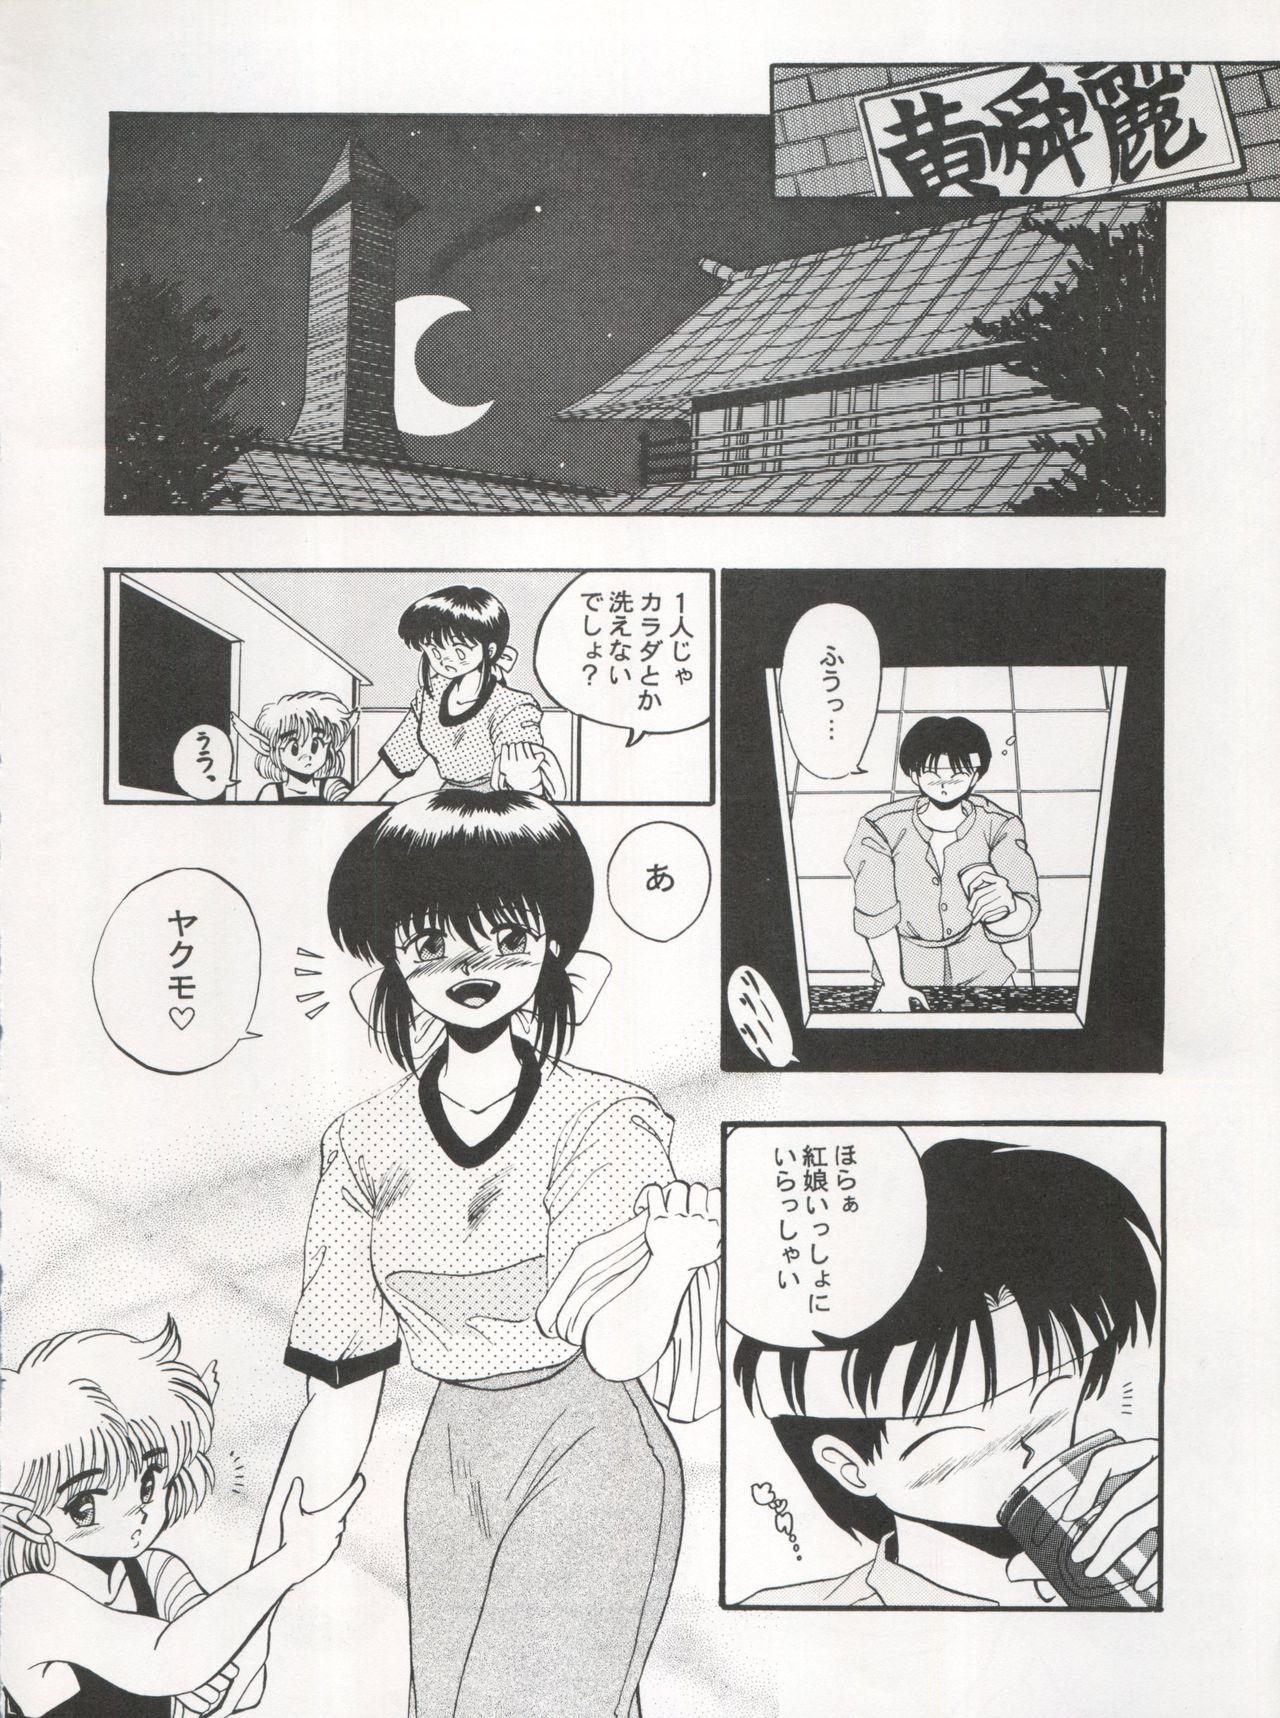 Young 逮捕されちゃうぞ - Fushigi no umi no nadia Youre under arrest Minky momo 3x3 eyes Funny - Page 12